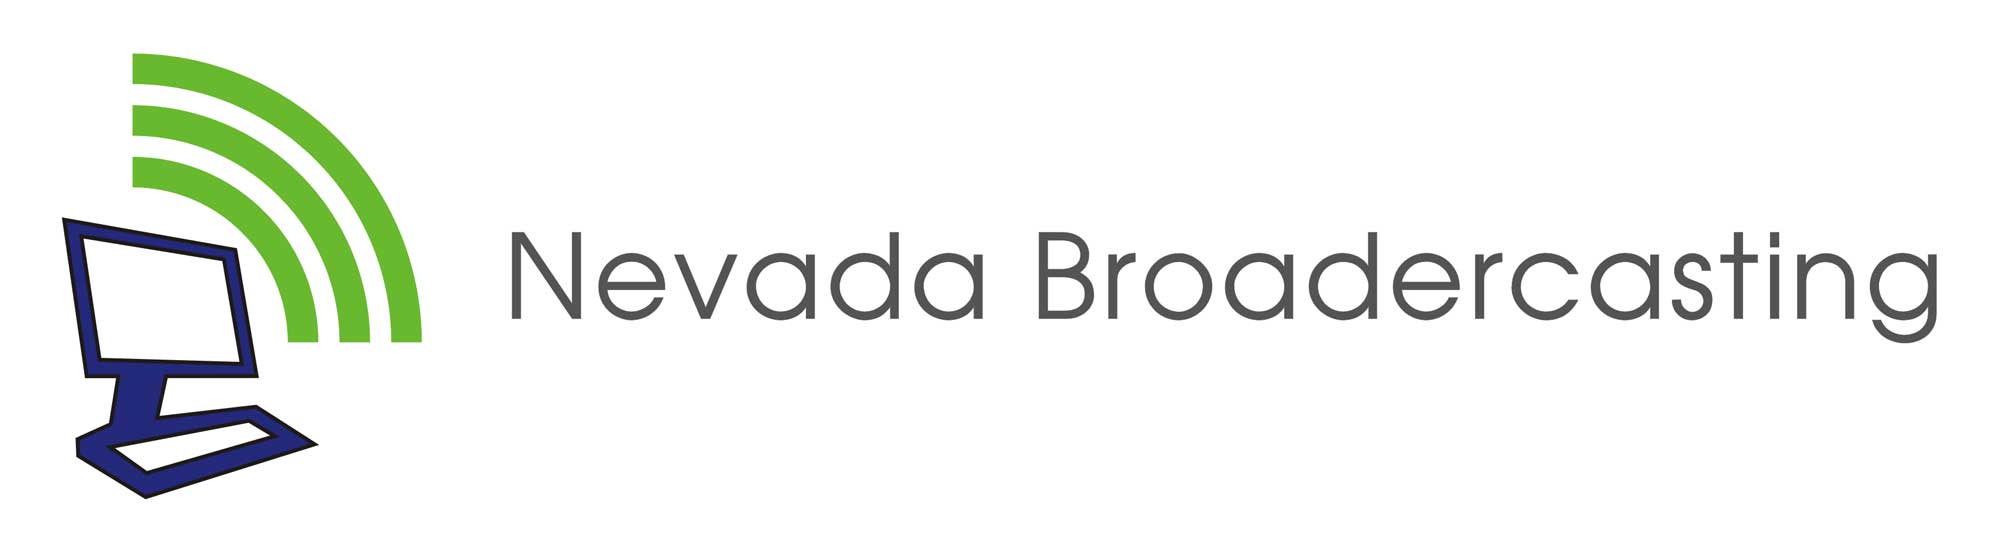 NVbroadercasting Logo